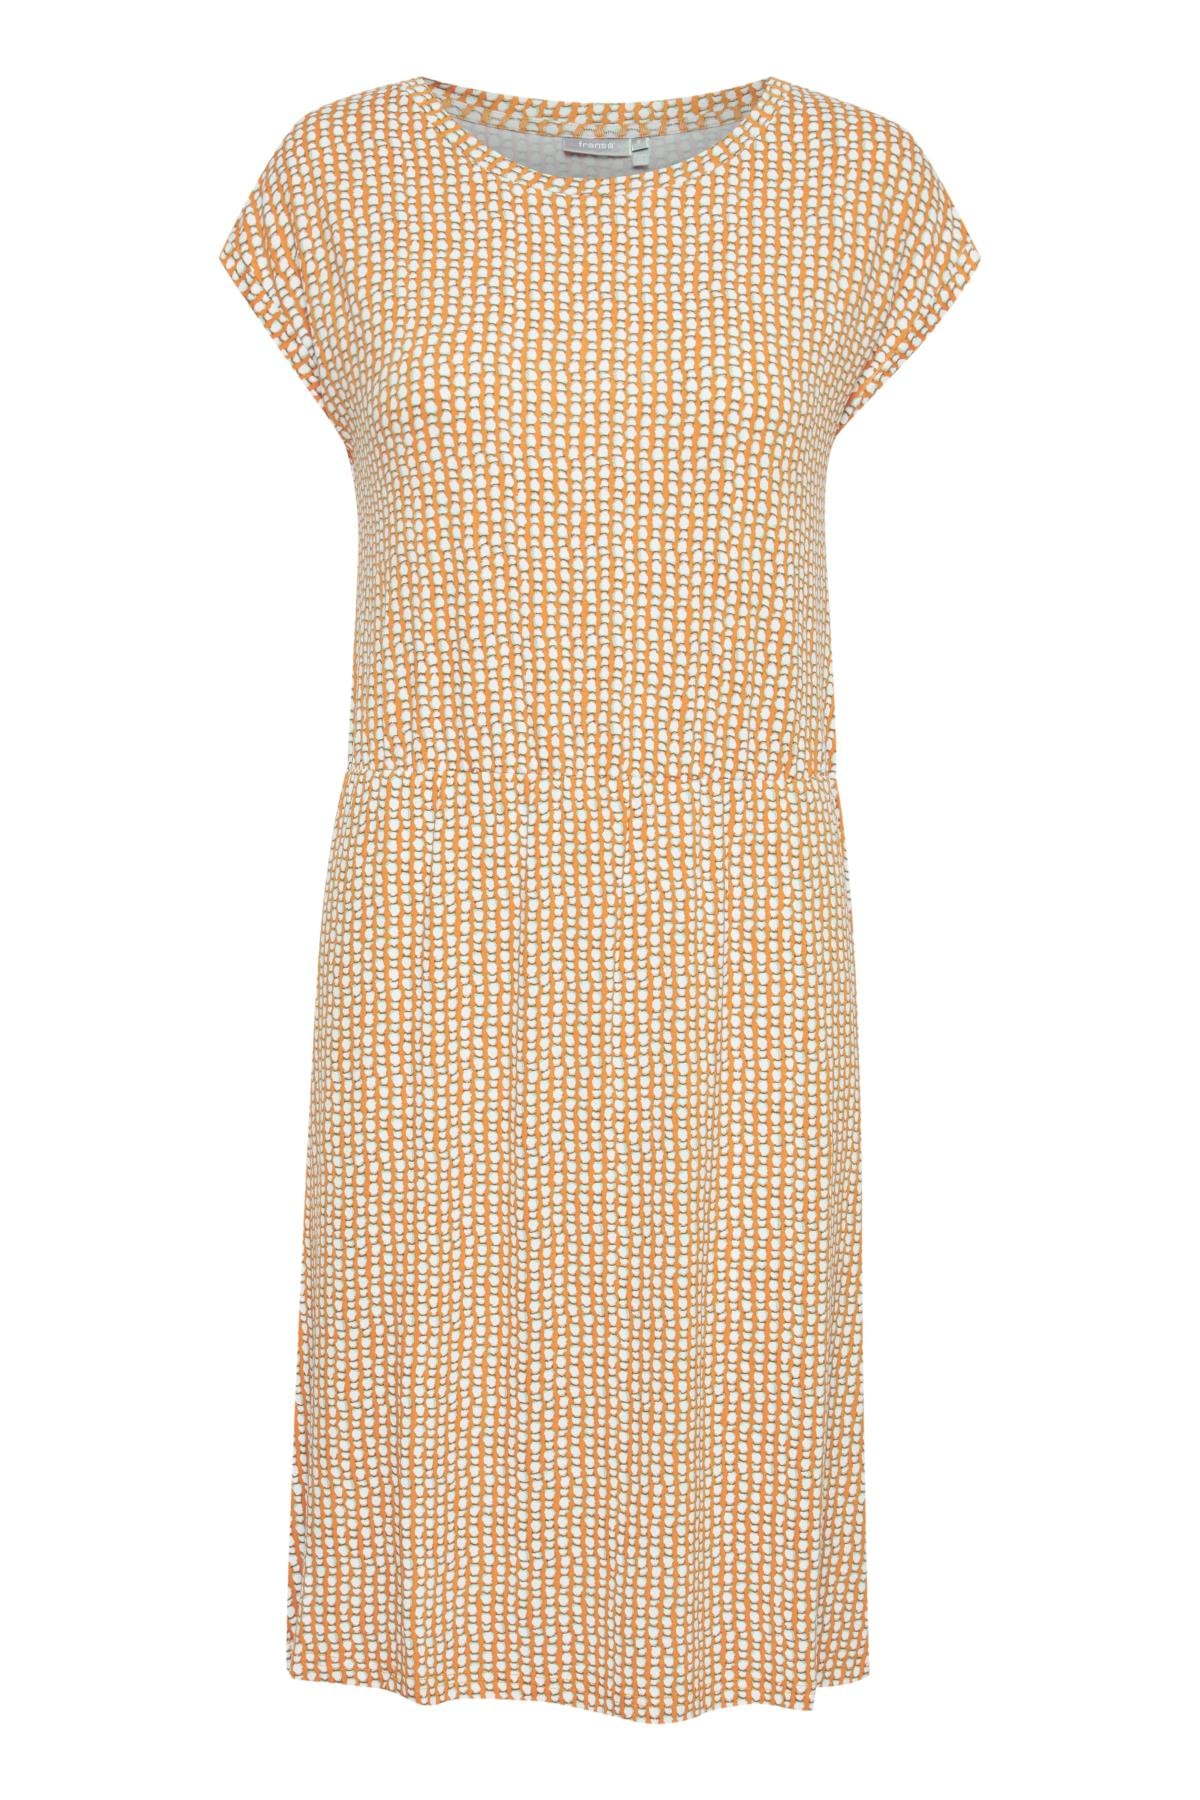 - 20609230« Jerseykleid FRAMDOT | BAUR fransa online Dress bestellen 4 »Fransa